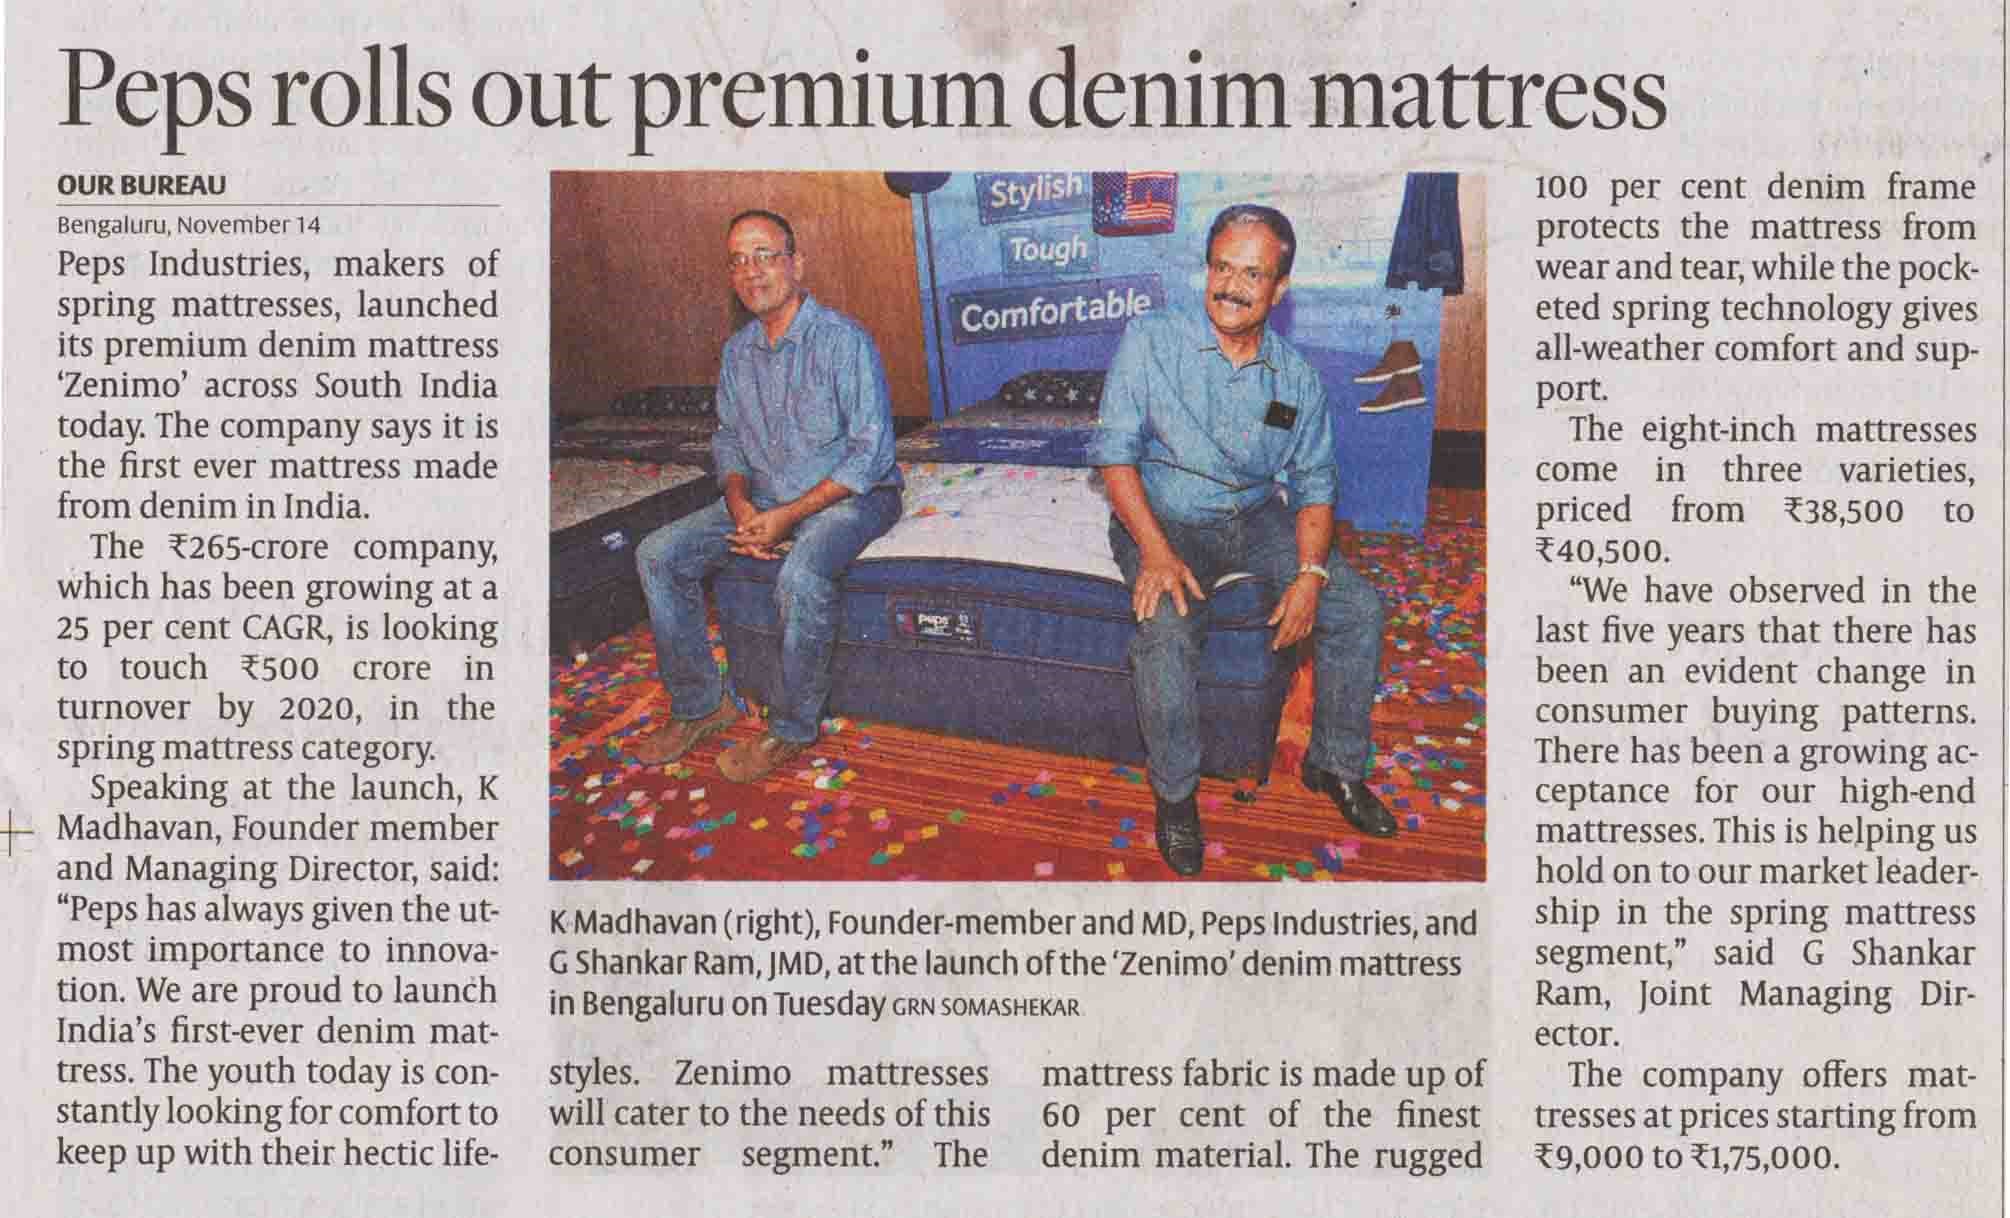 Peps rolls out premium denim mattress